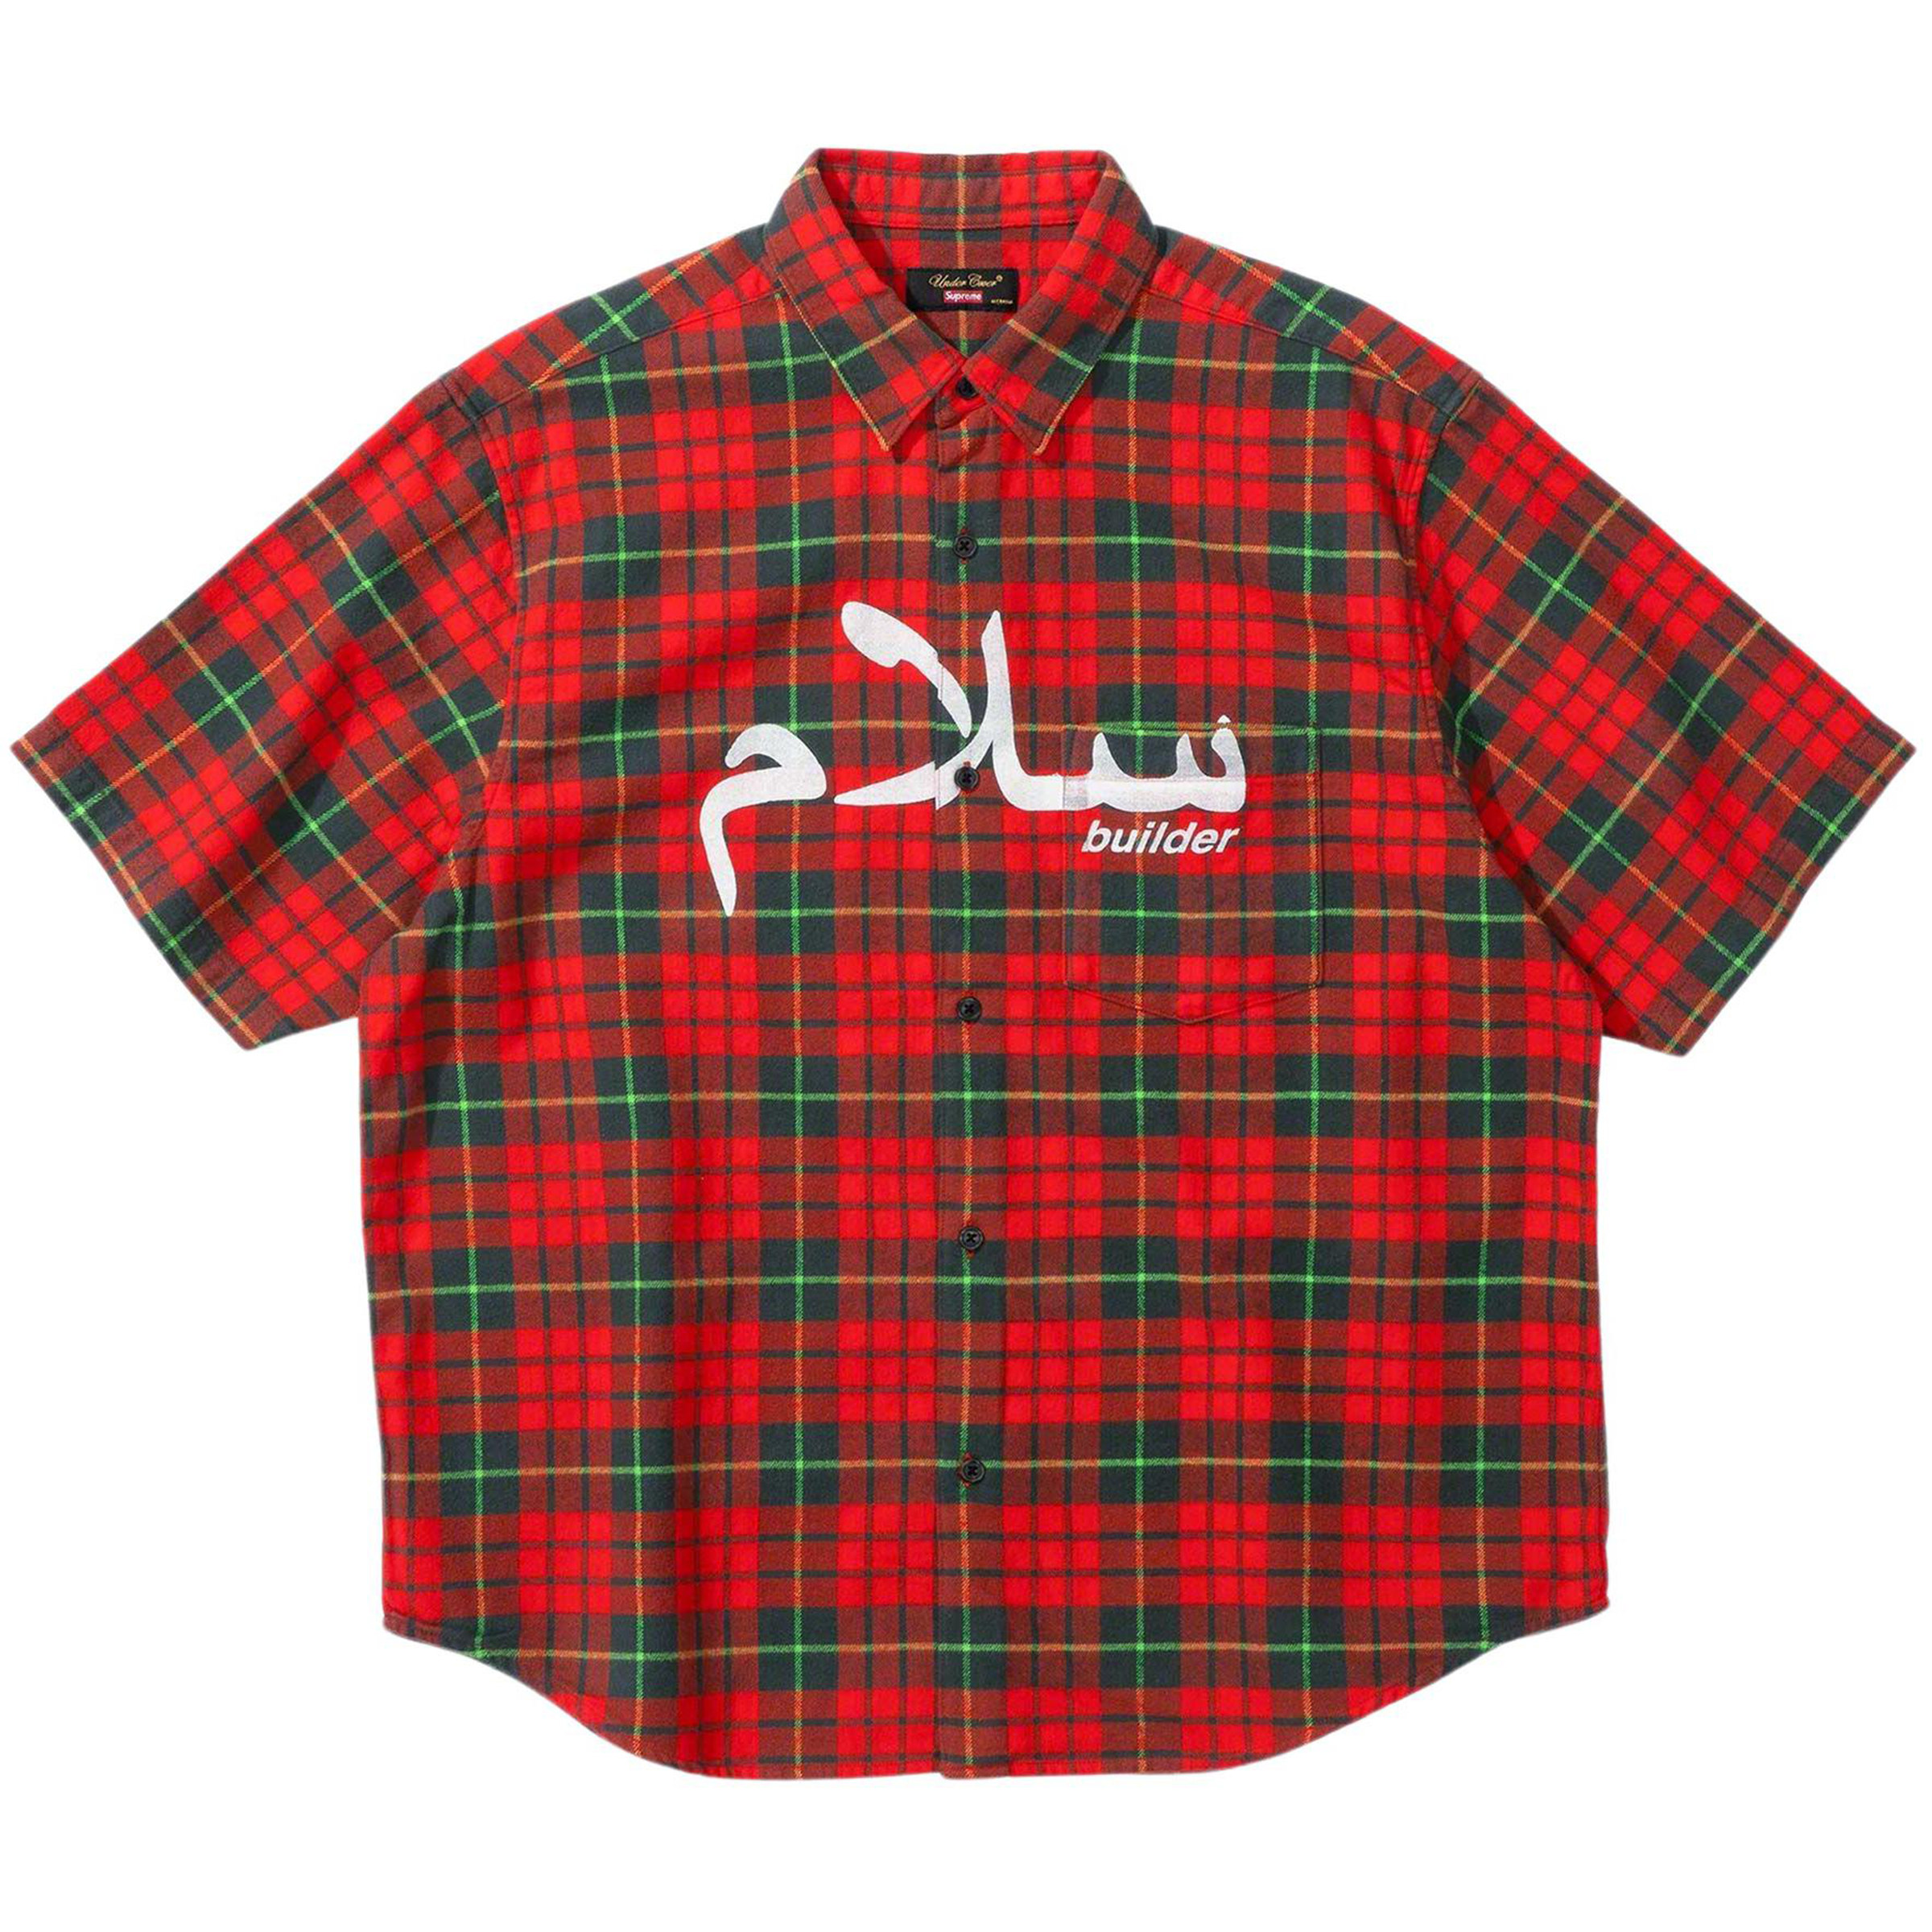 Supreme x UNDERCOVER - Flannel Shirt